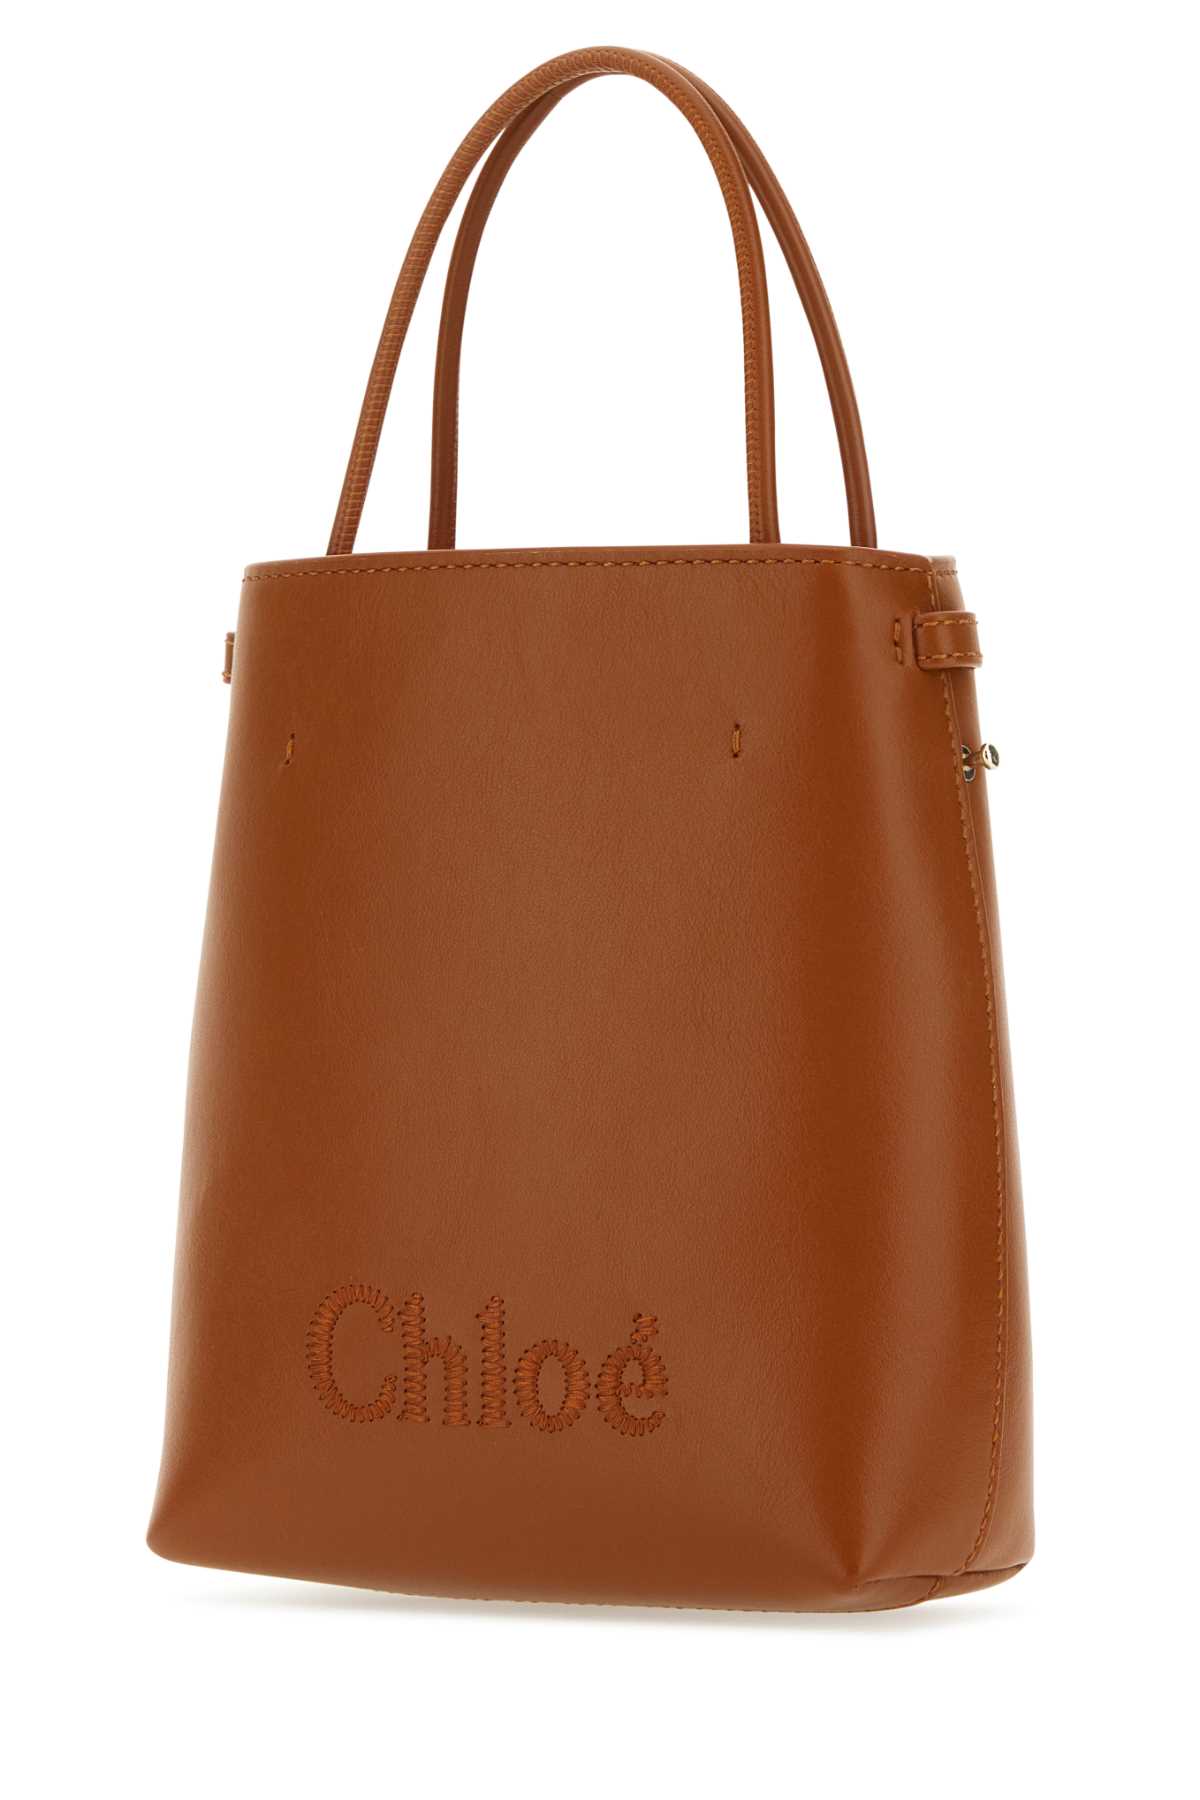 Chloé Caramel Leather Micro Sense Handbag